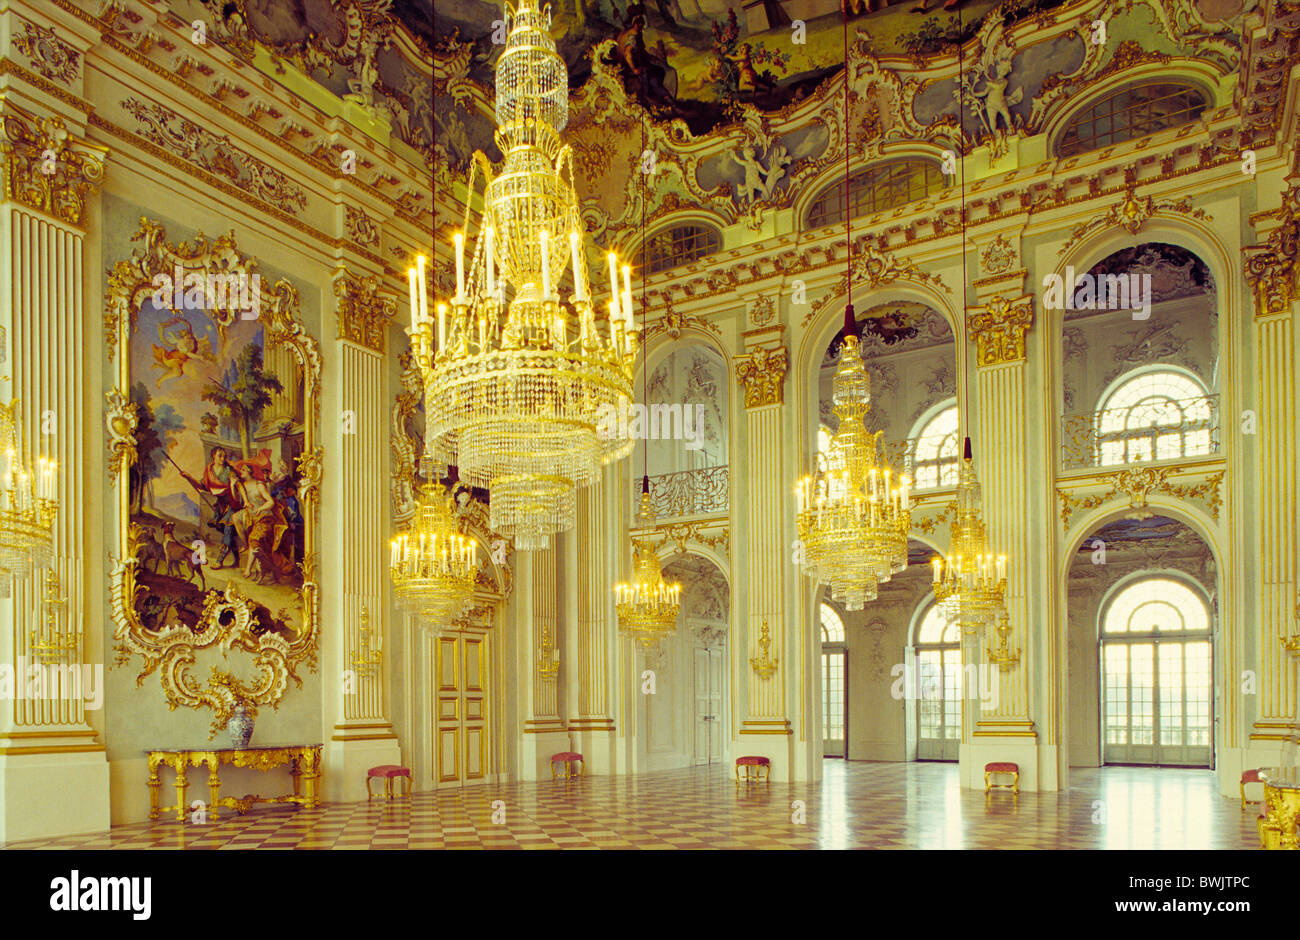 Nymphenburg Palace Interior Immagini e Fotos Stock - Alamy